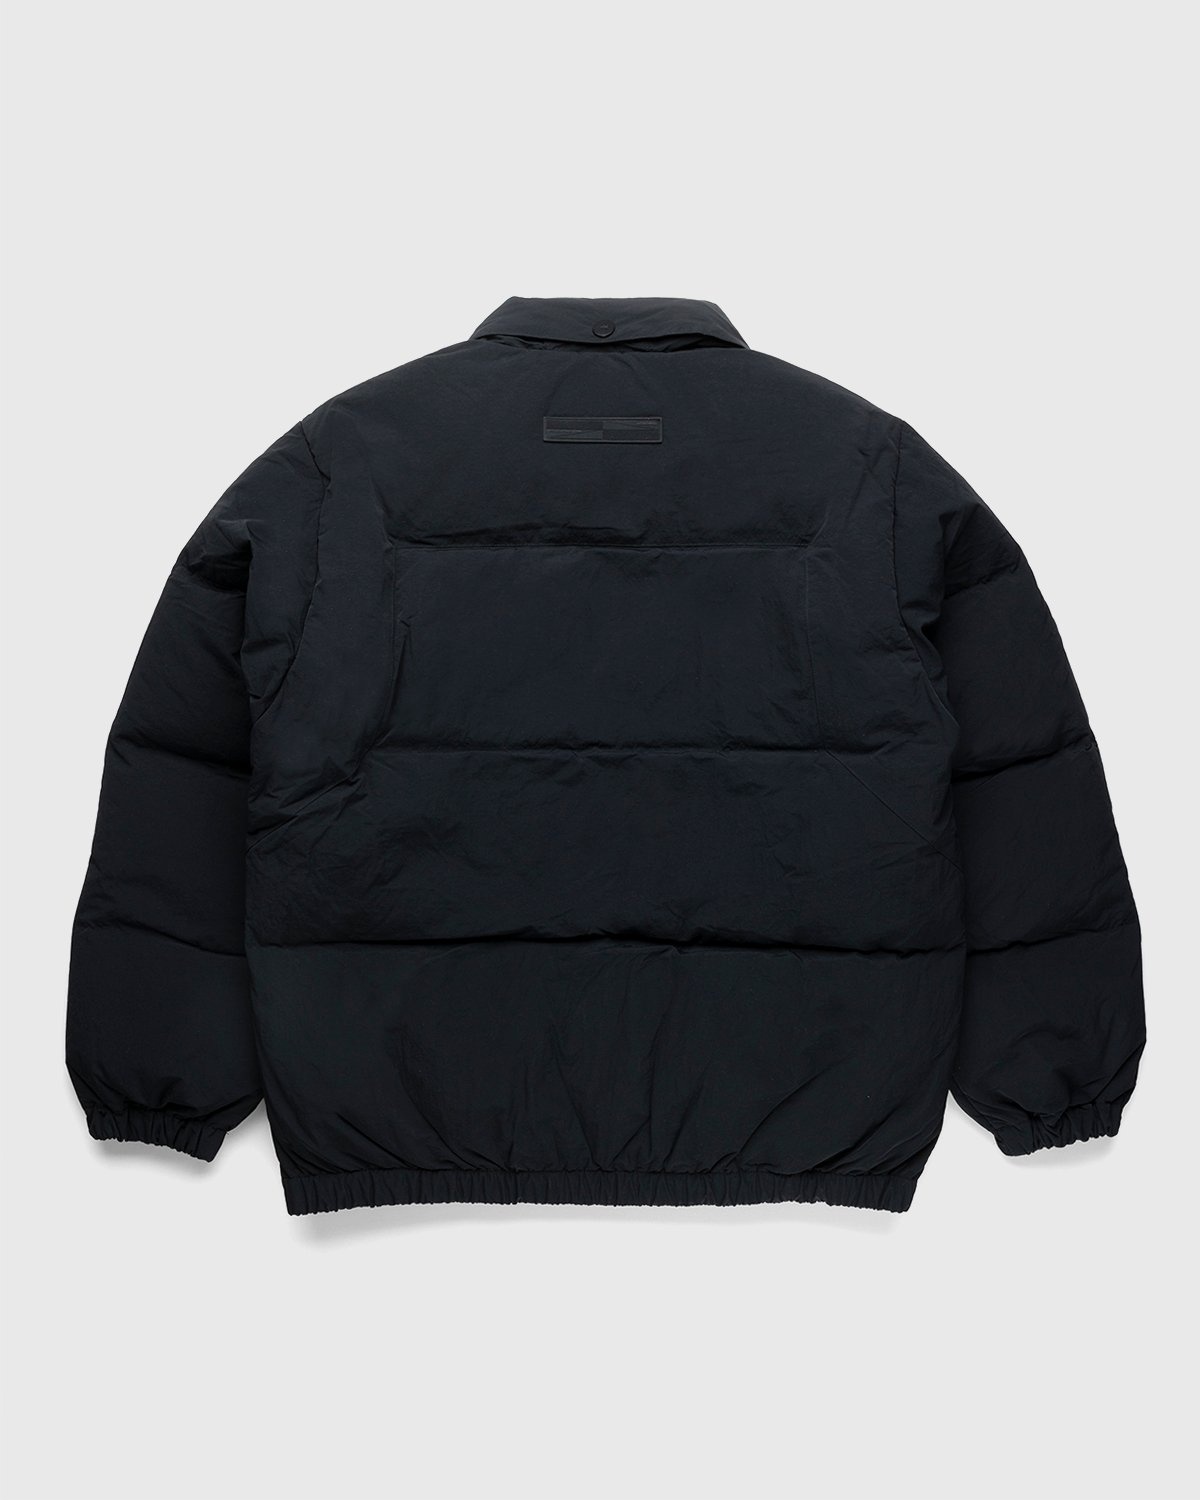 A-Cold-Wall* – Cirrus Jacket Black - Down Jackets - Black - Image 2